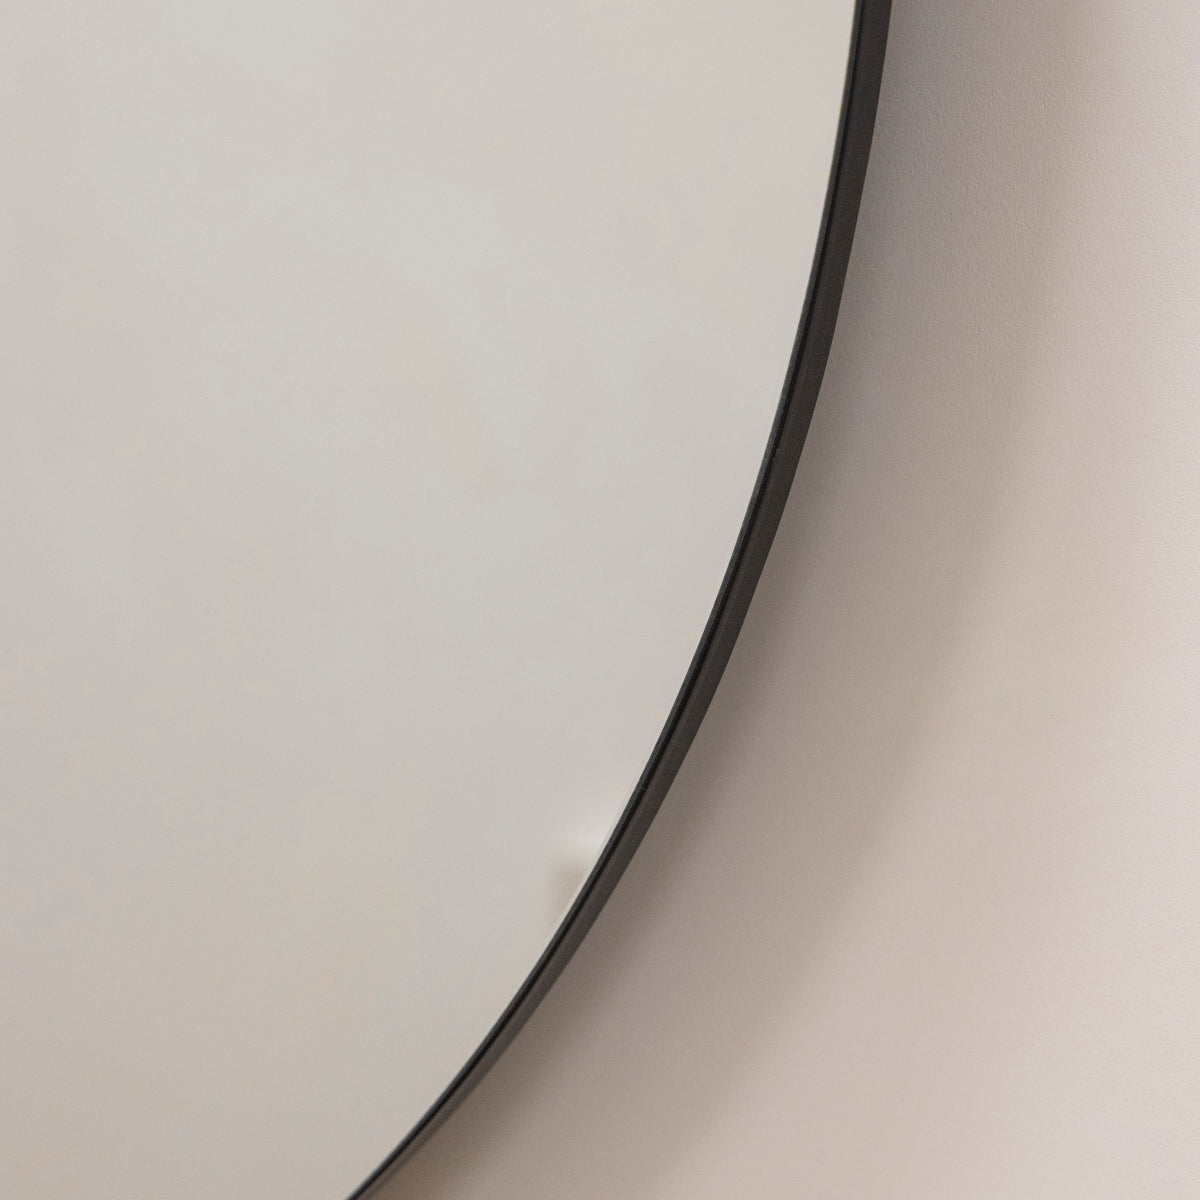 Edge - Large Frameless Round Wall Mirror 100cm x 100cm